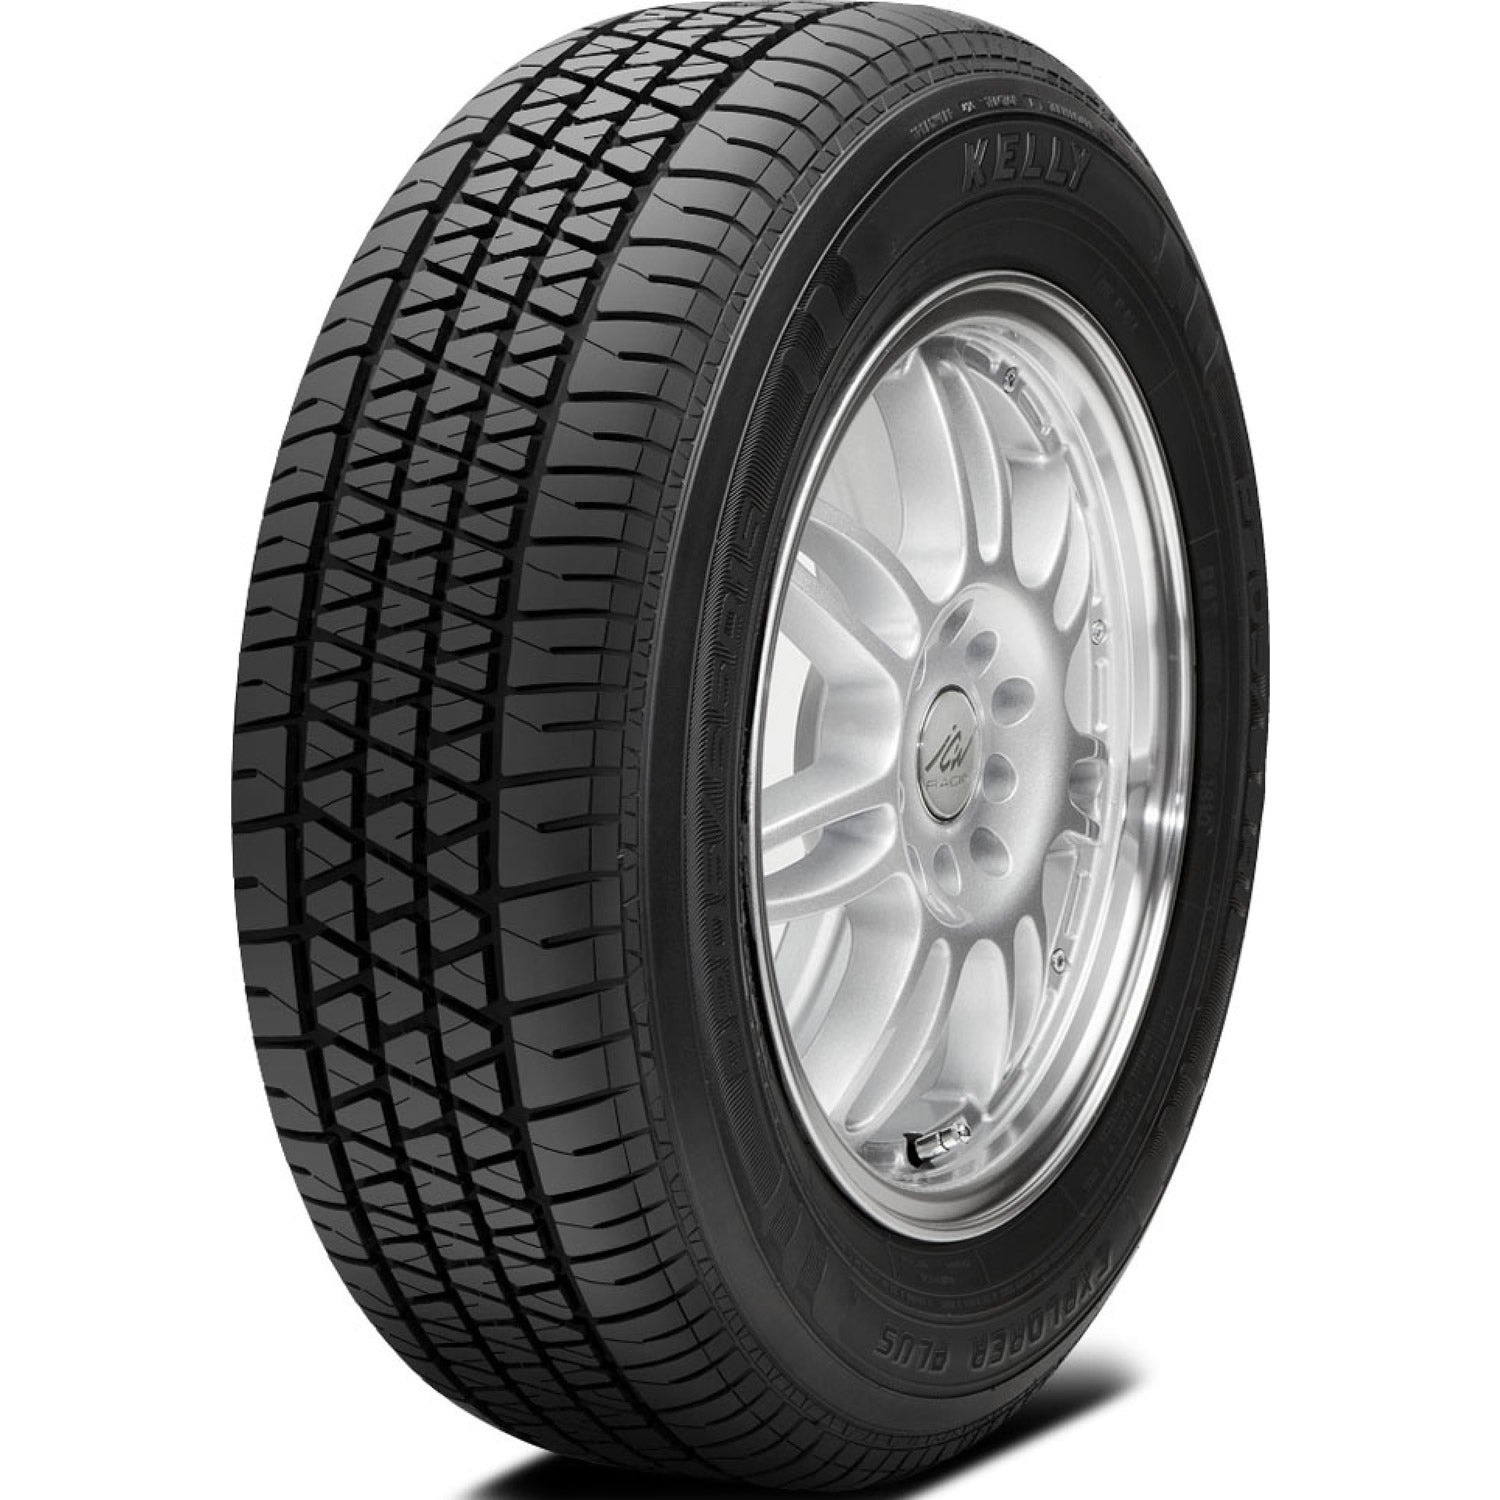 KELLY EXPLORER PLUS 215/60R16 (26.1X8.7R 16) Tires